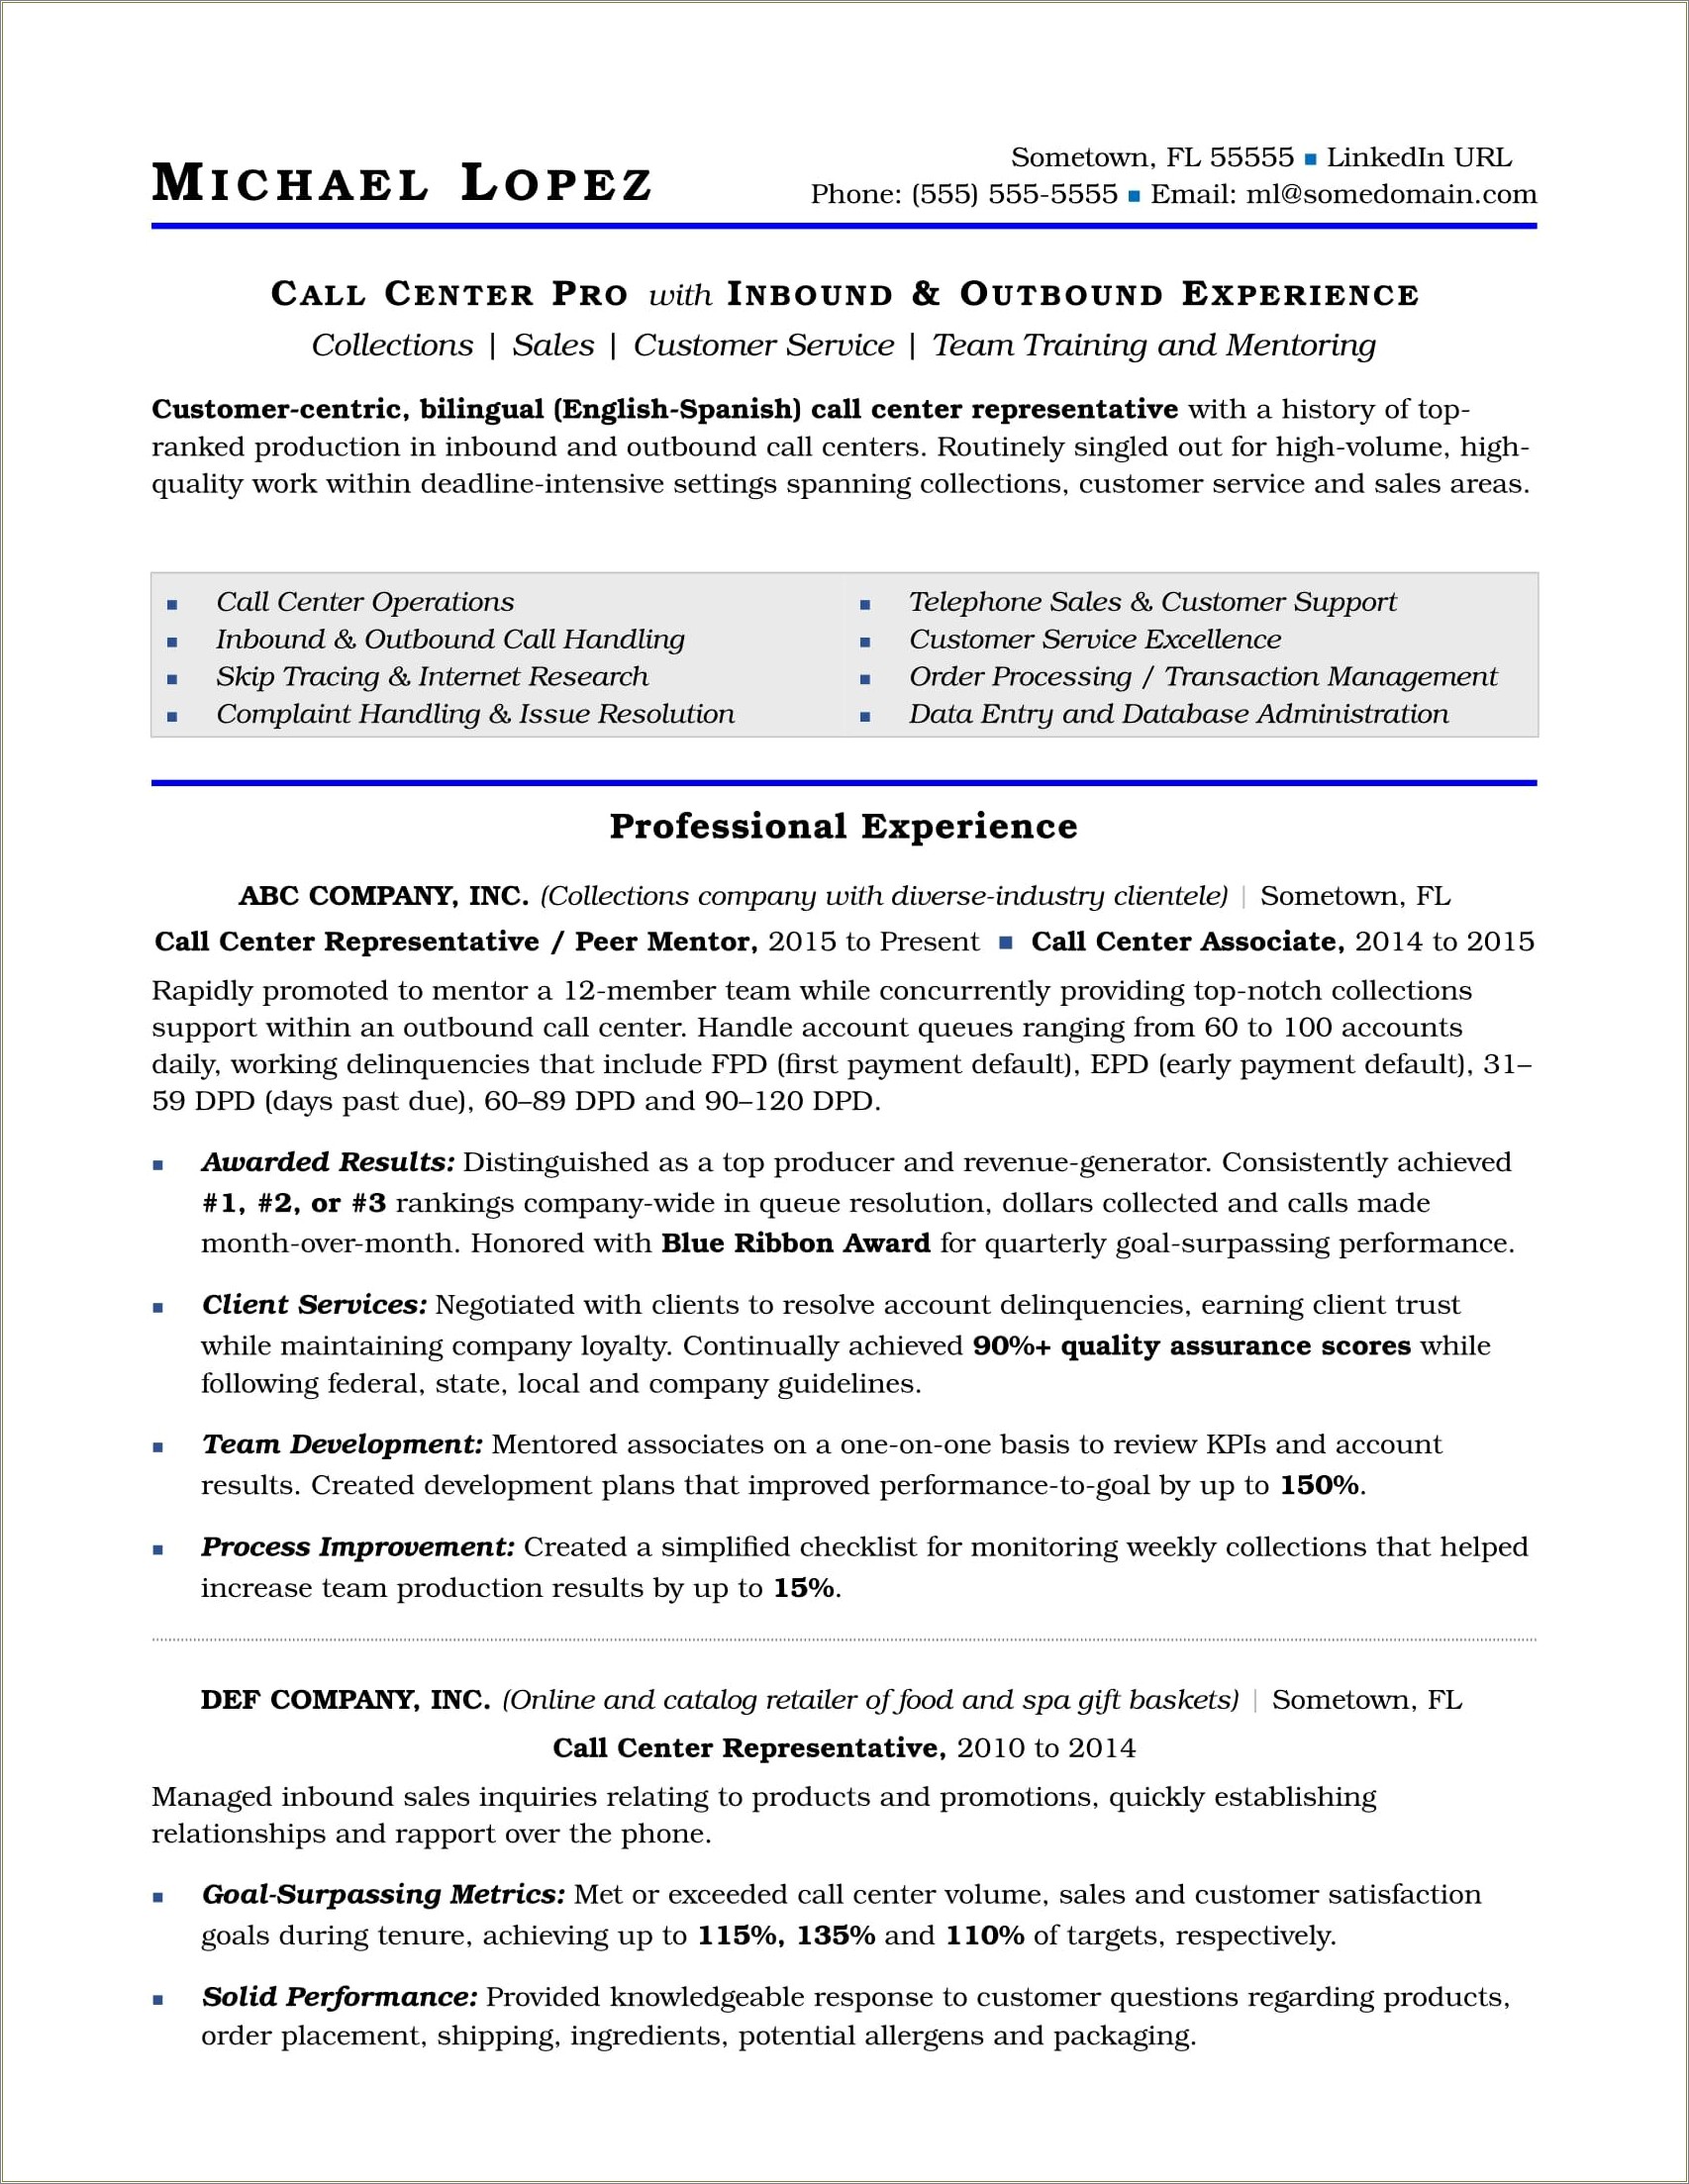 Resume Job Description Examples For Increasing Company Revenues